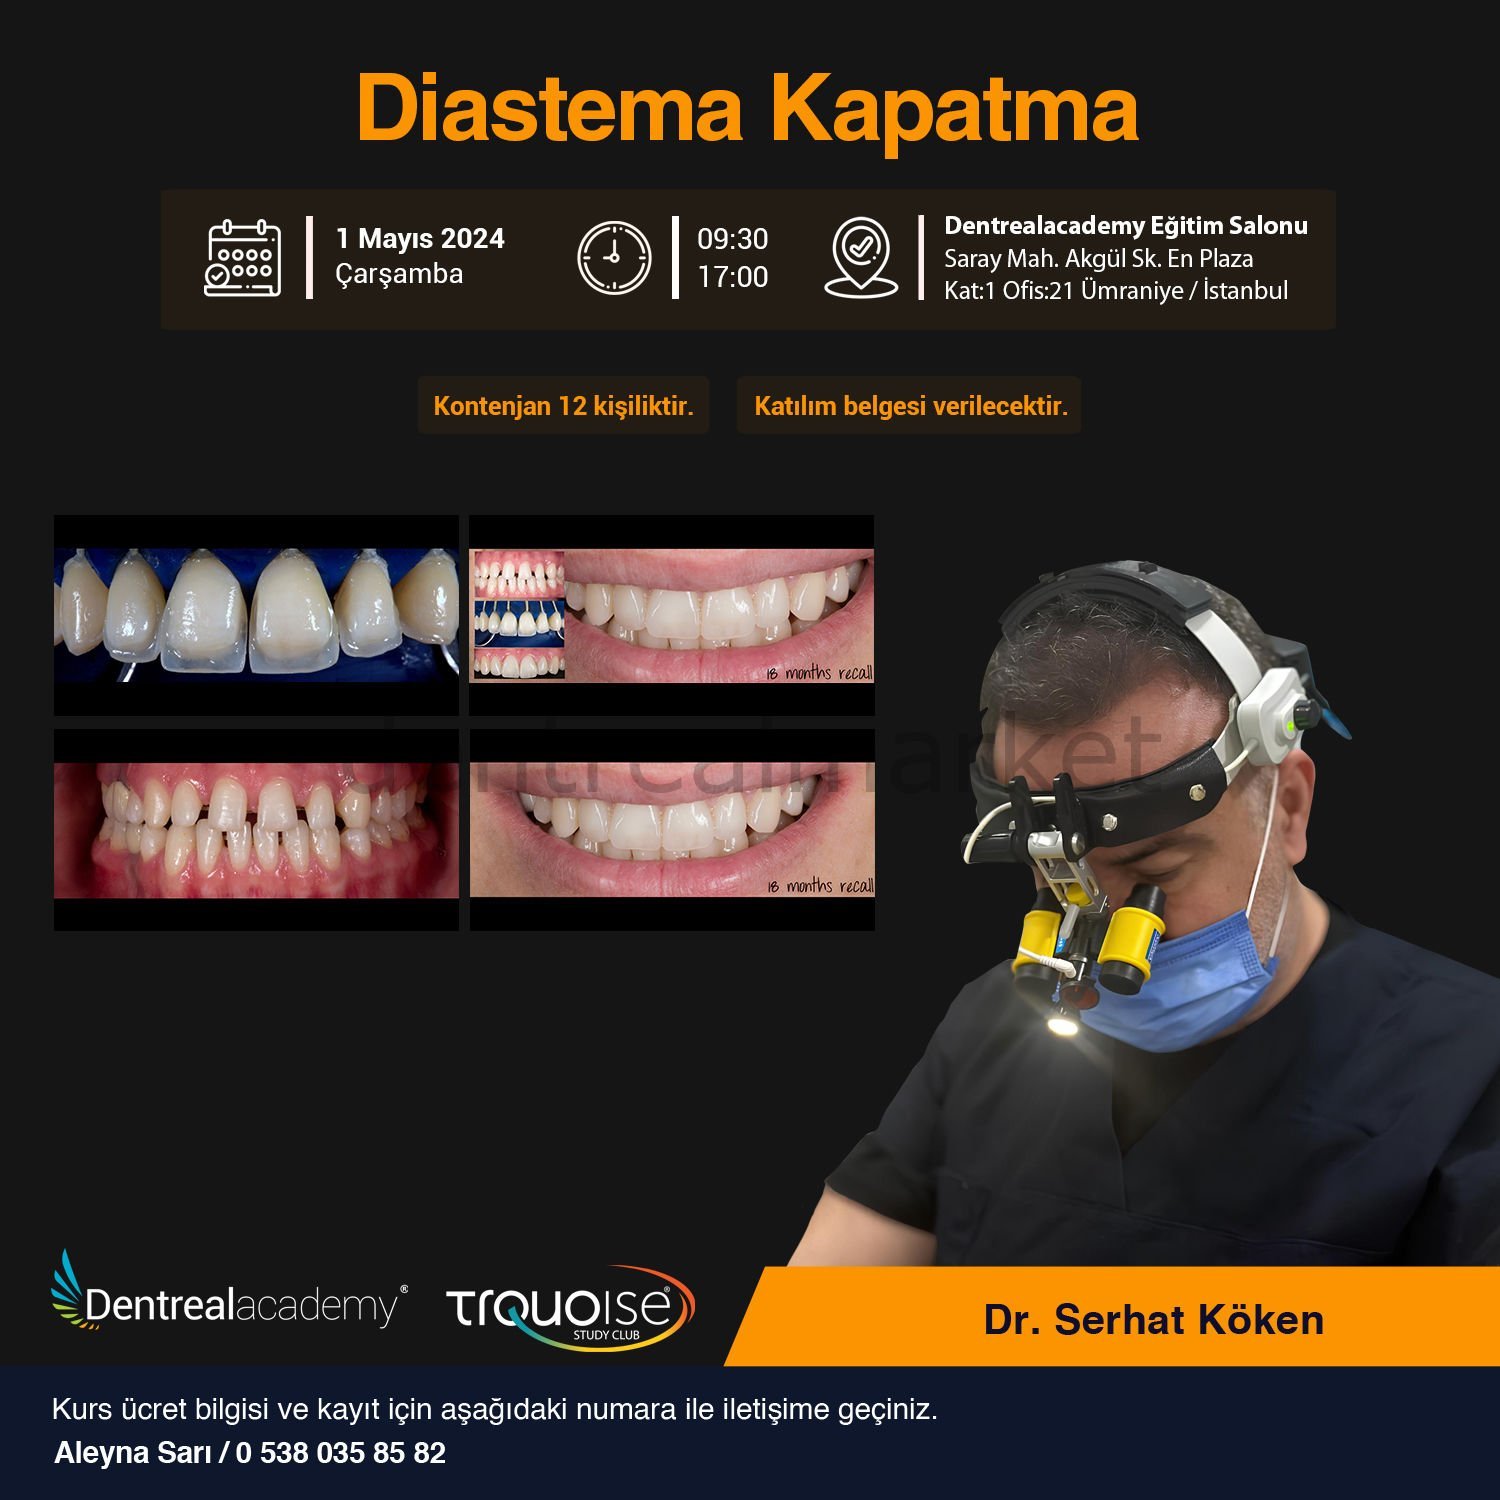 Diastema Kapatma - Dr. Serhat Köken